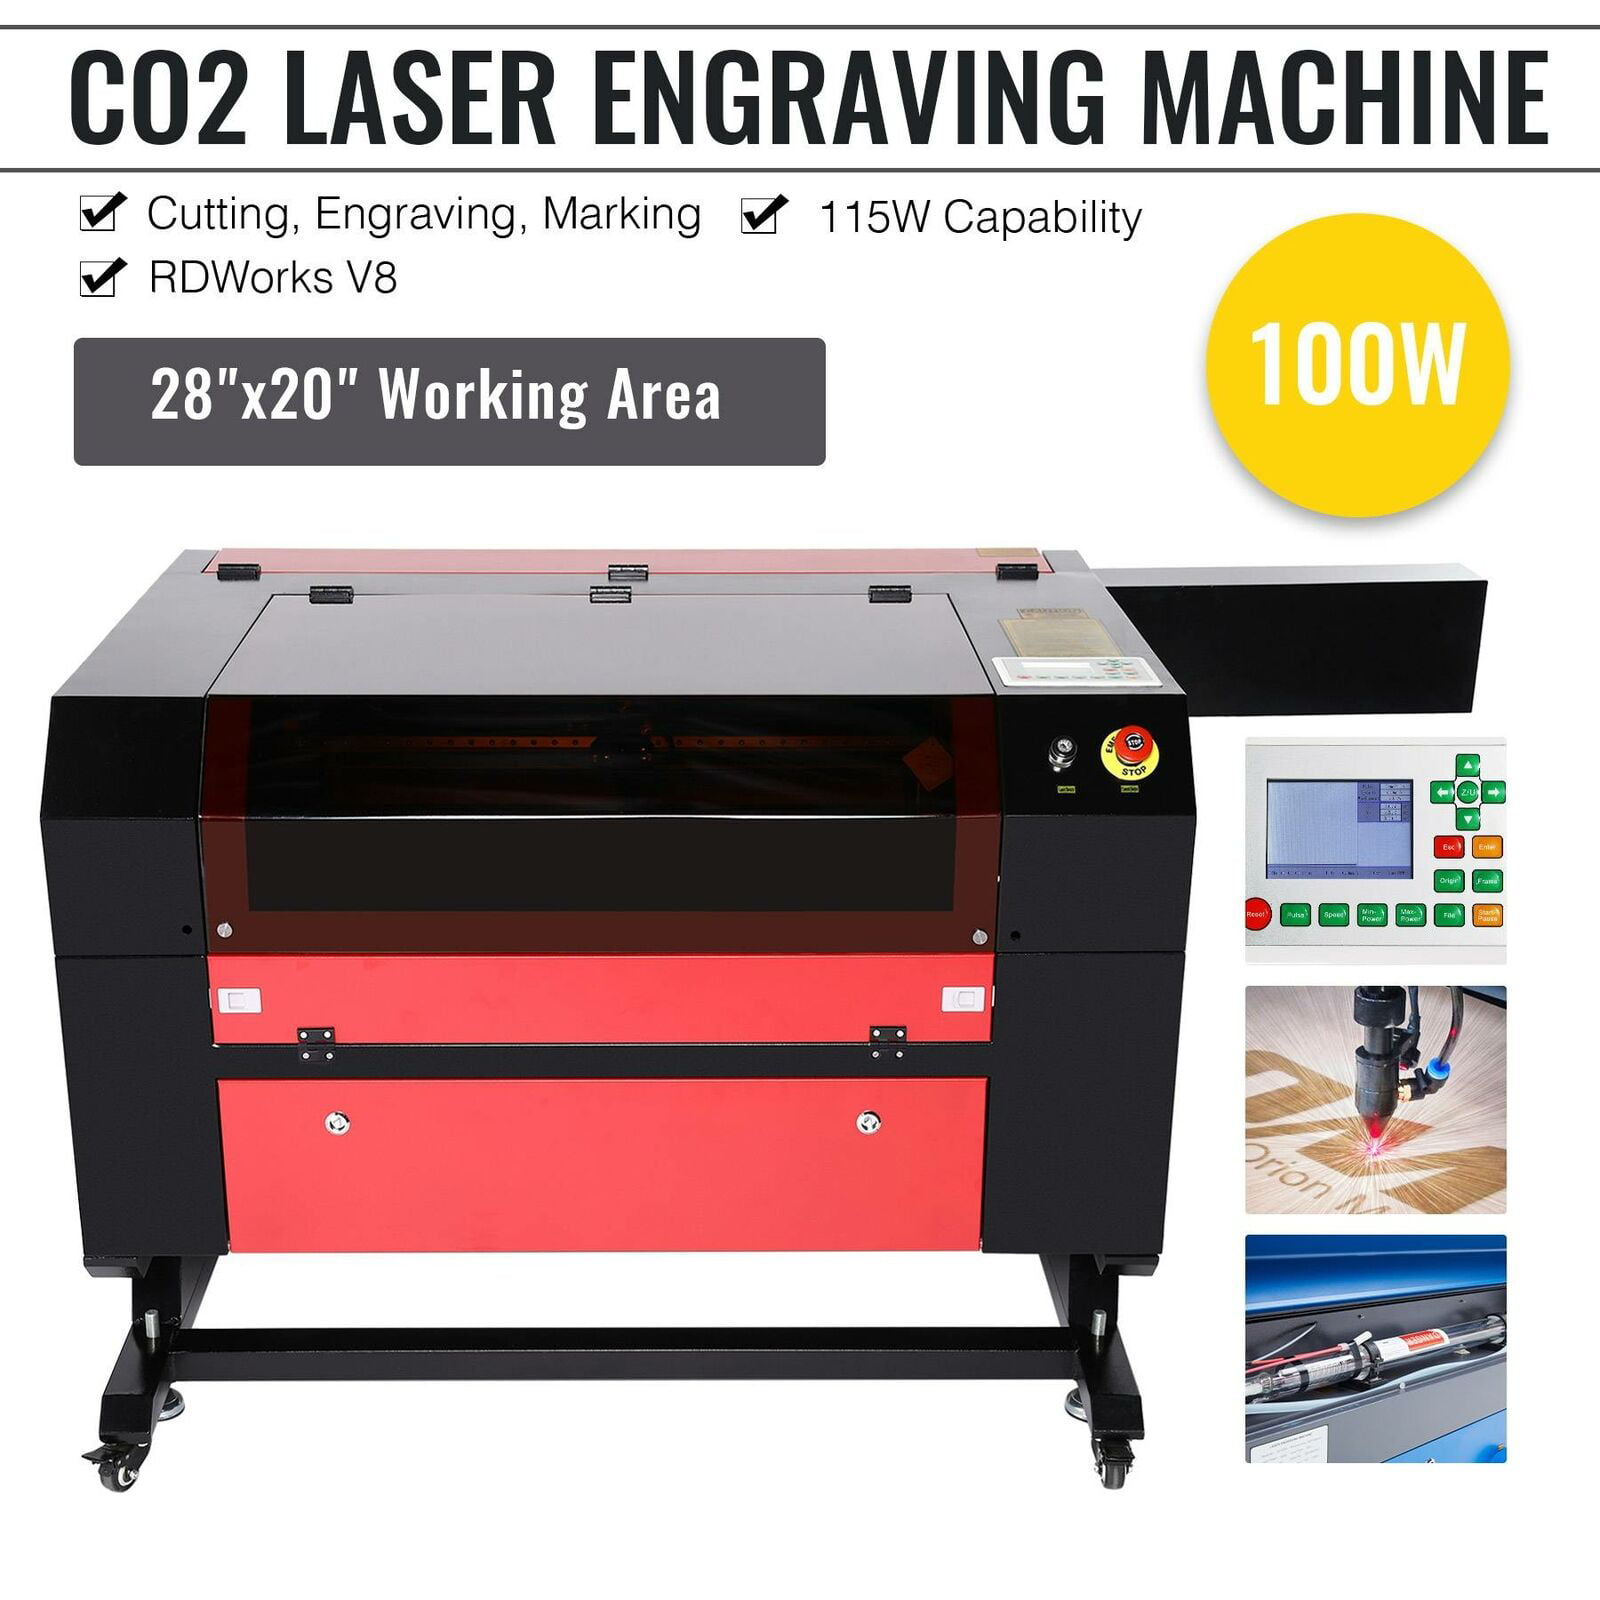 OMTech Co2 Laser Engraver Cutter 100W 28x20 Ruida Engraving